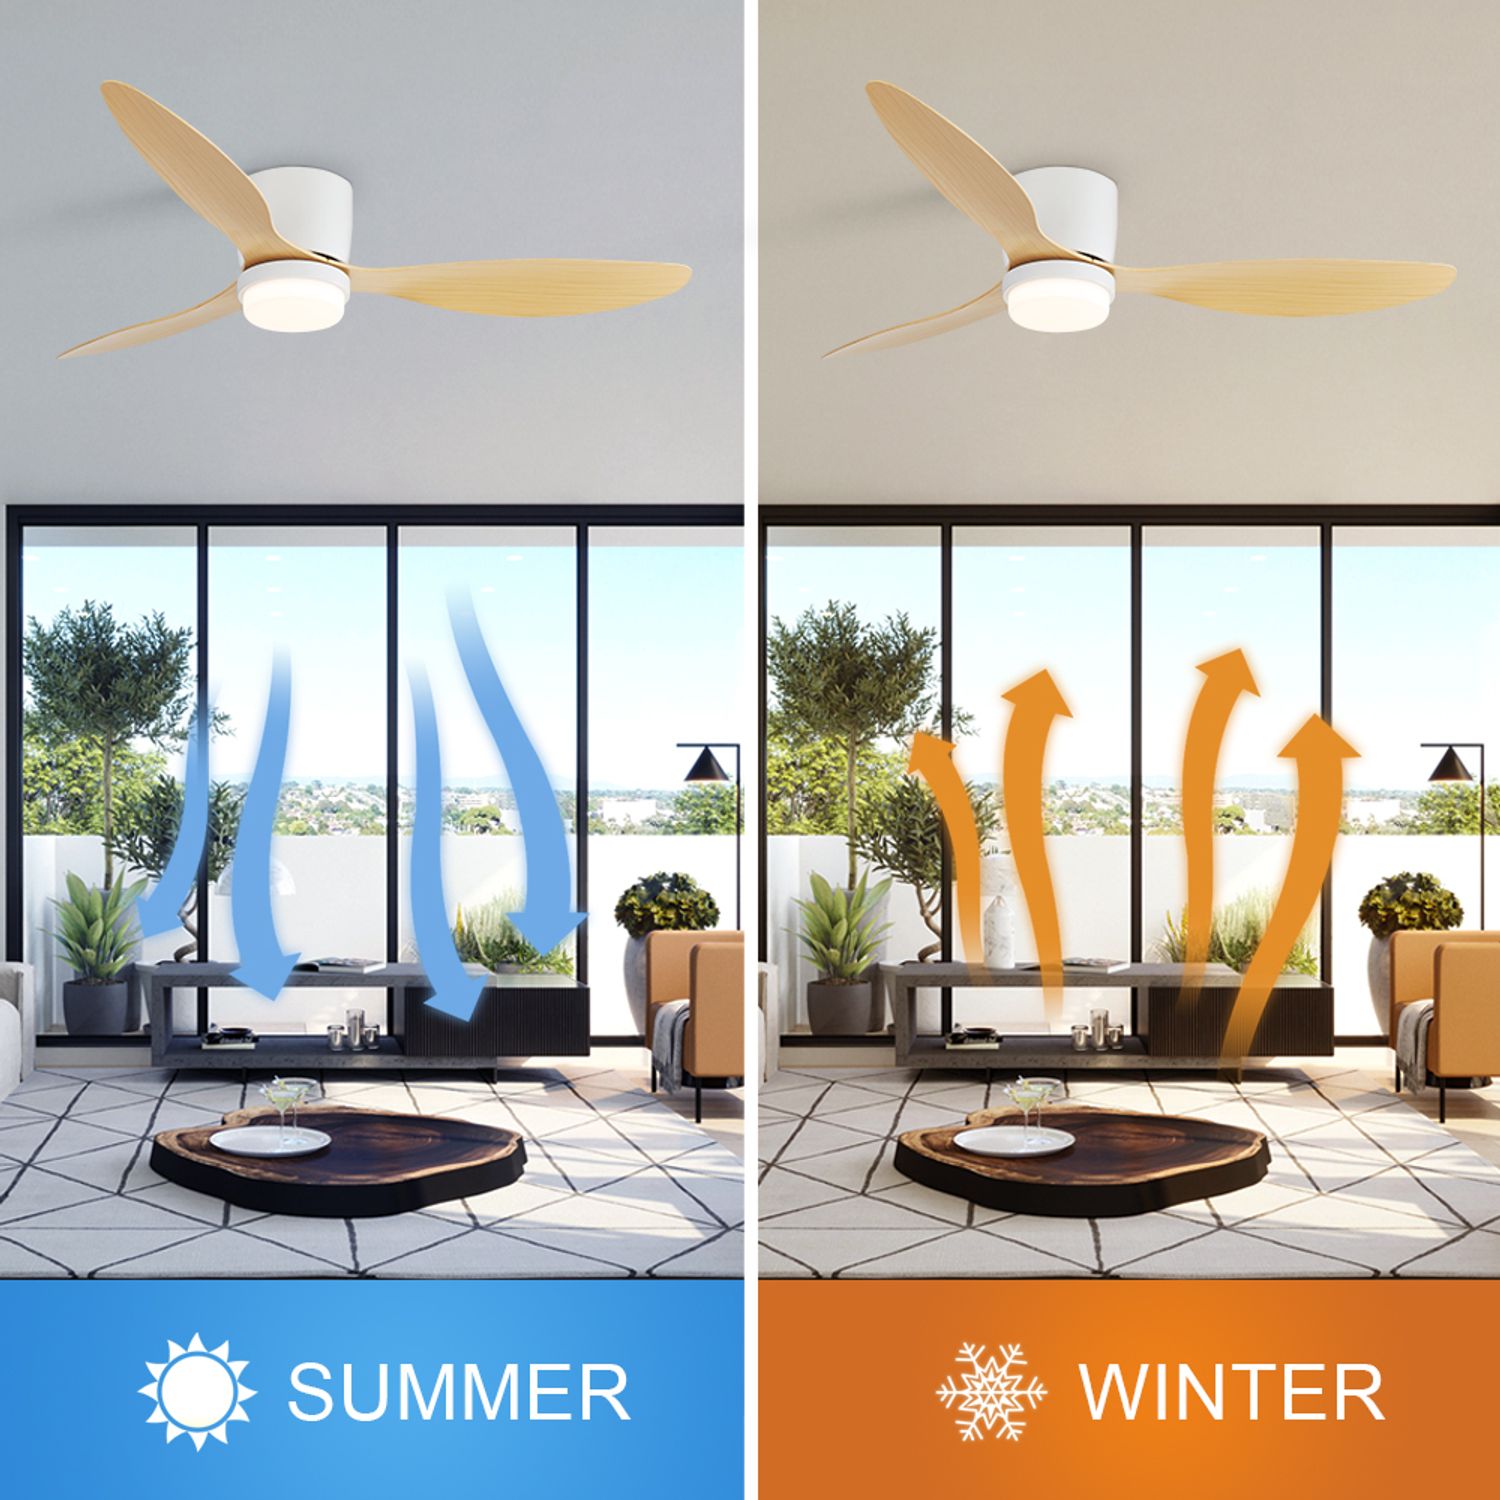 silent reversible motor inside quiet modern ceiling fan in summer and winter